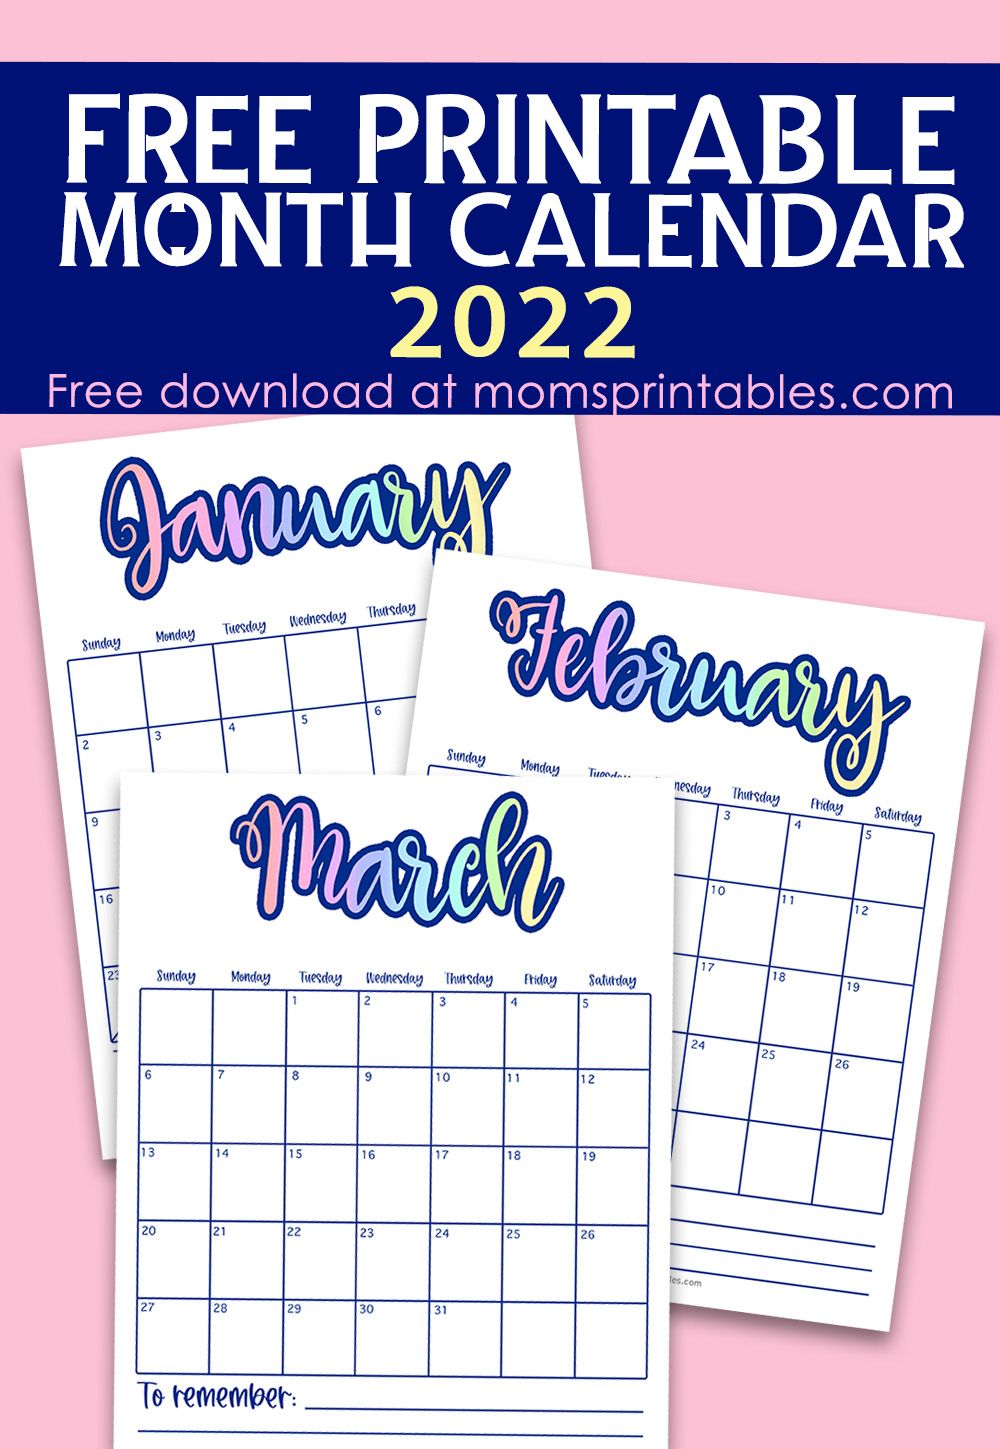 Printable Calendar Free Monthly | Free 2022 Calendar | Free Printable Calendar 2022 | Download and print at MomsPrintables!